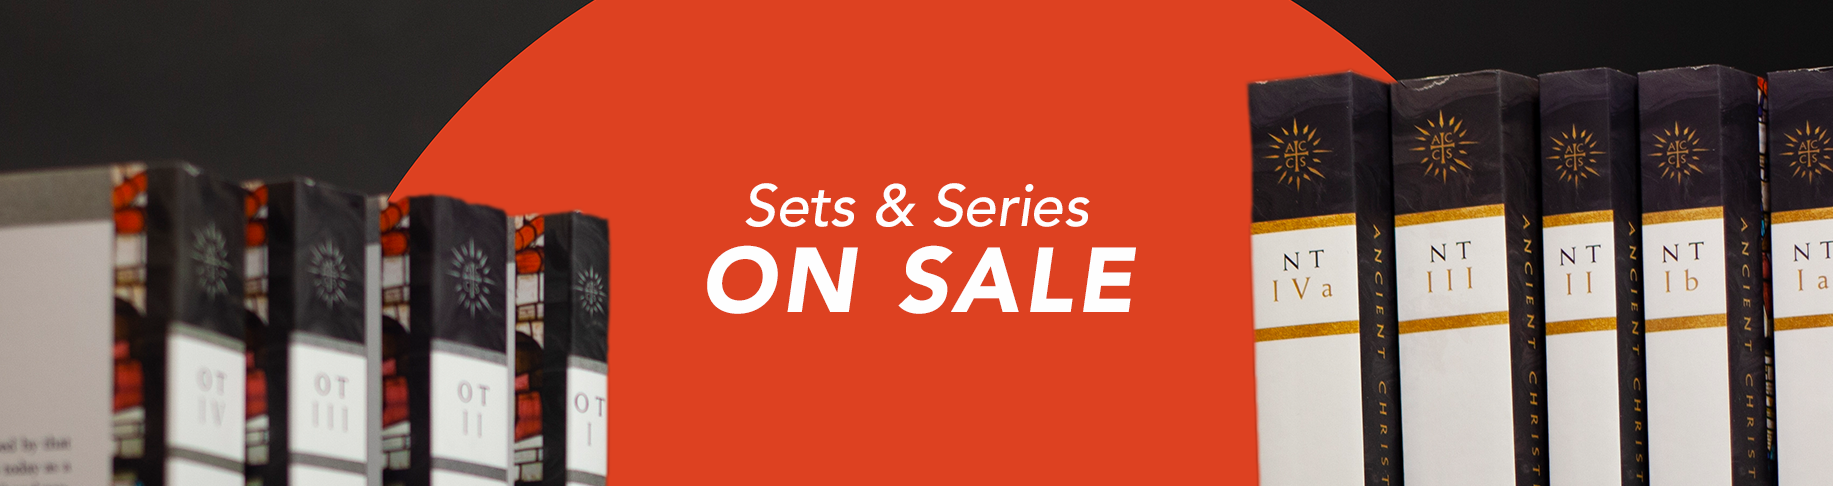 IVP Set and Series Sale - Shop Now